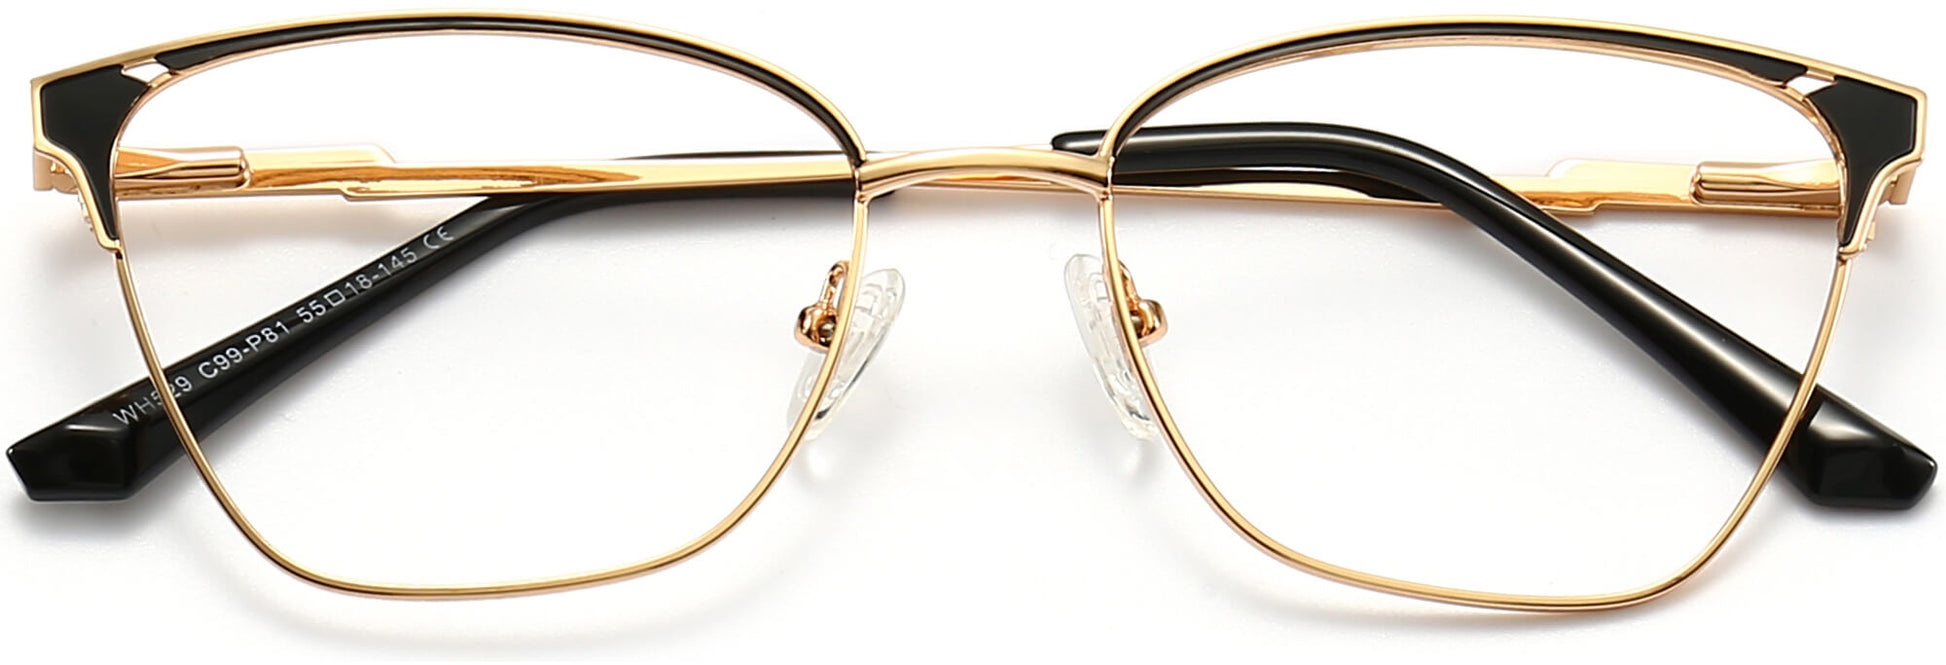 Galilea Cateye Black Eyeglasses from ANRRI, closed view